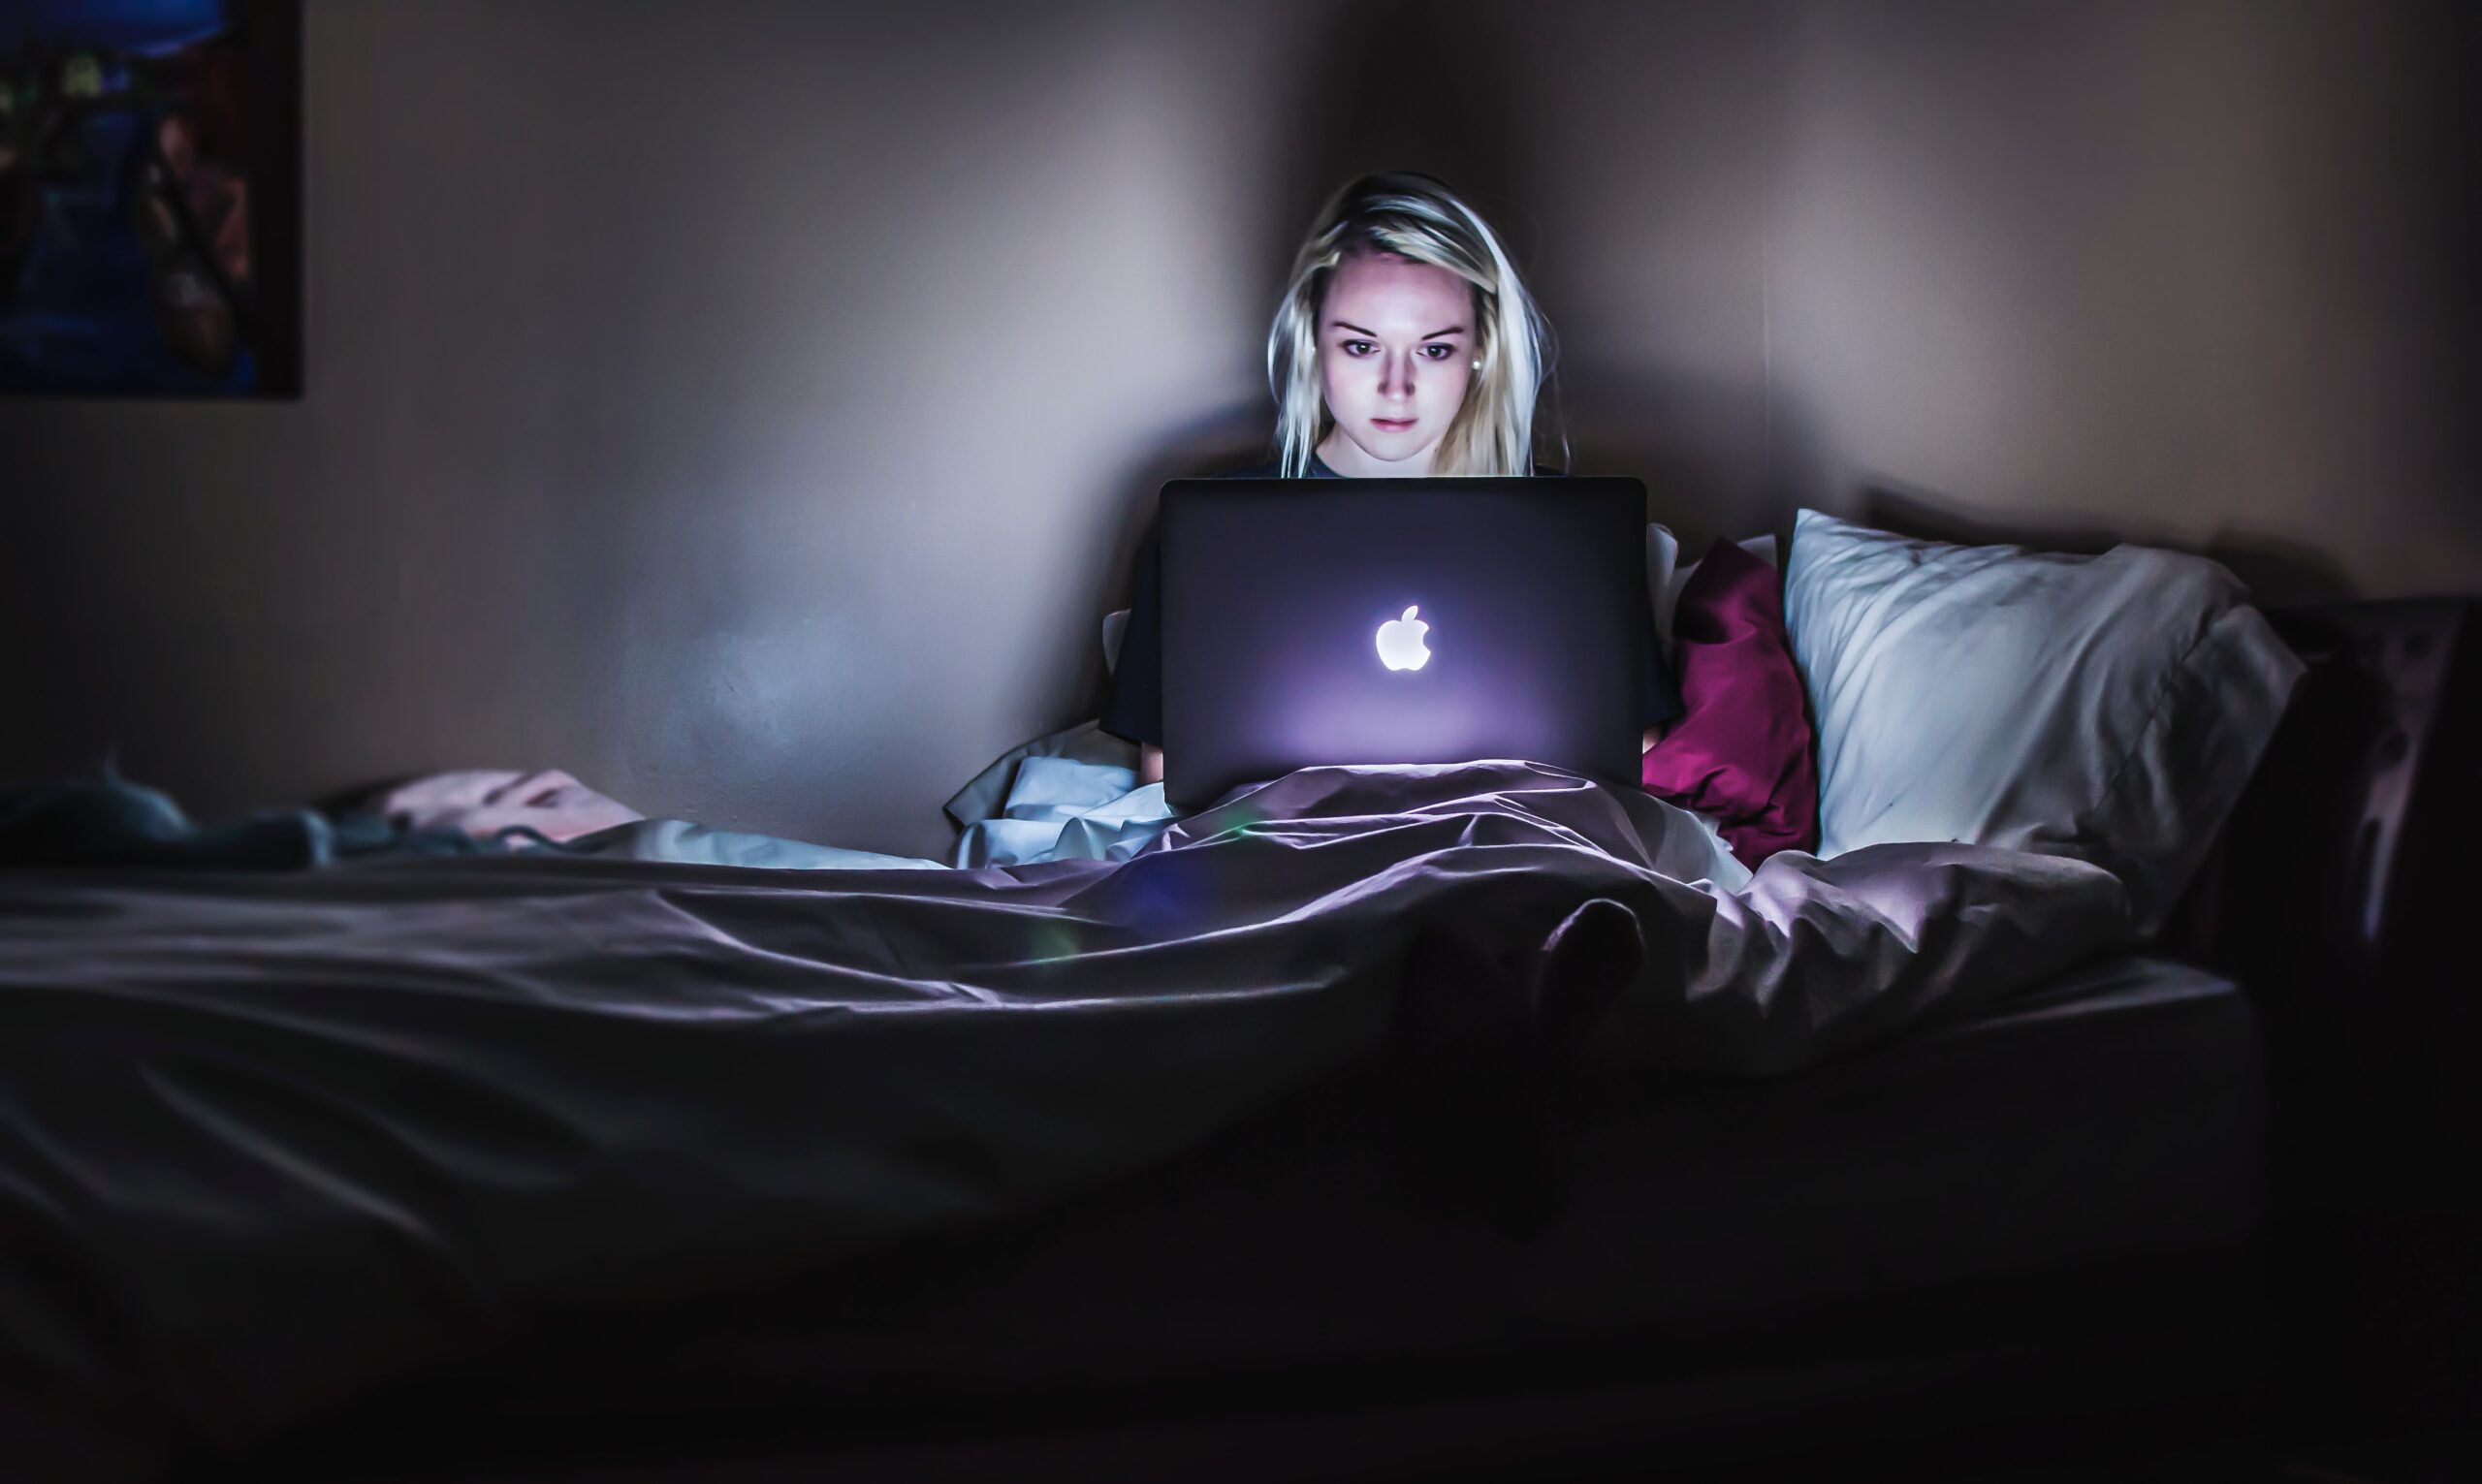 Woman at a laptop in the dark. Photo by Victoria Heath via Unsplash.